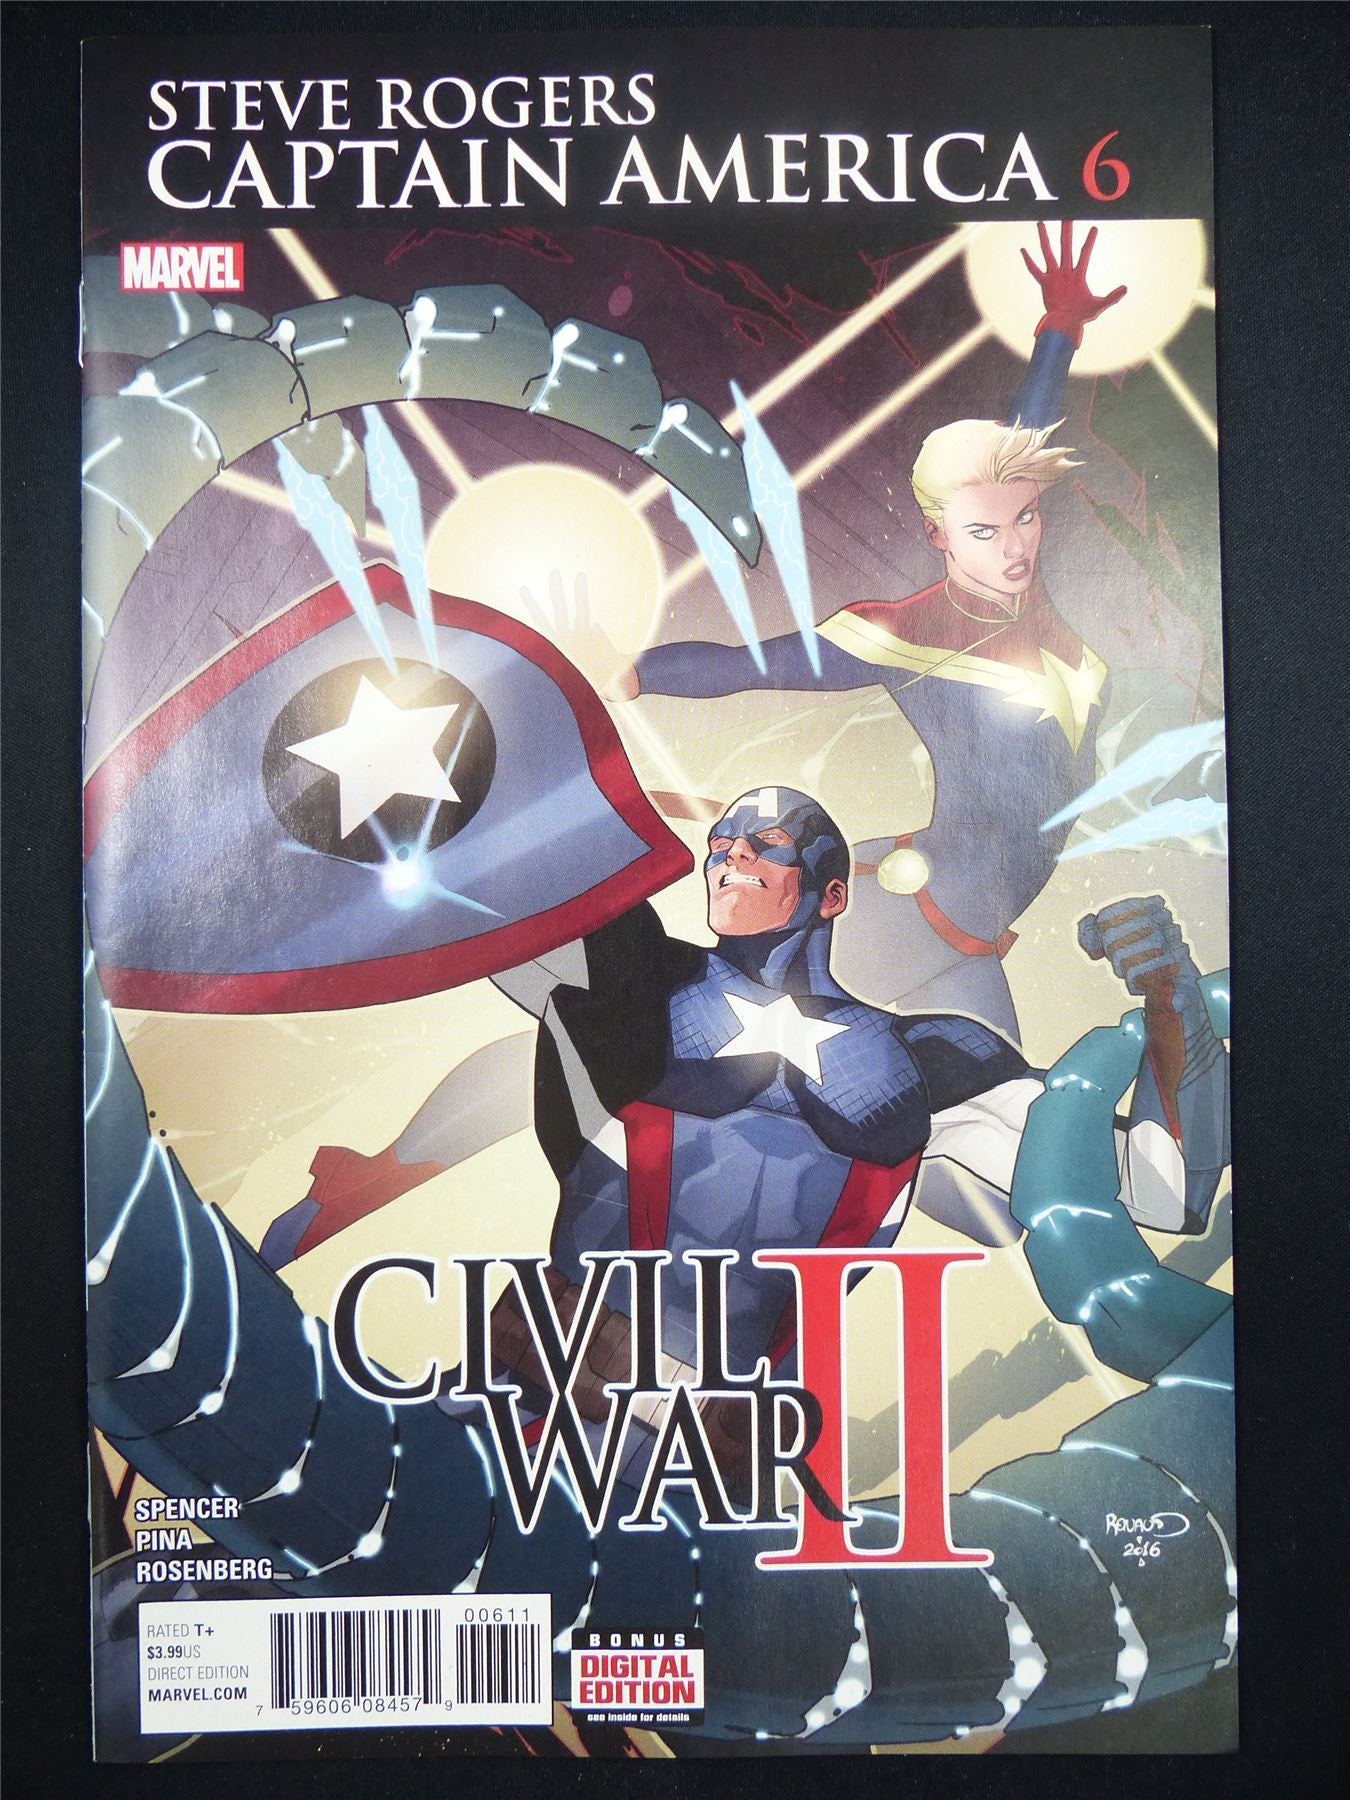 Steve Rogers: CAPTAIN America #6 - Civil War 2 - Marvel Comic #J3